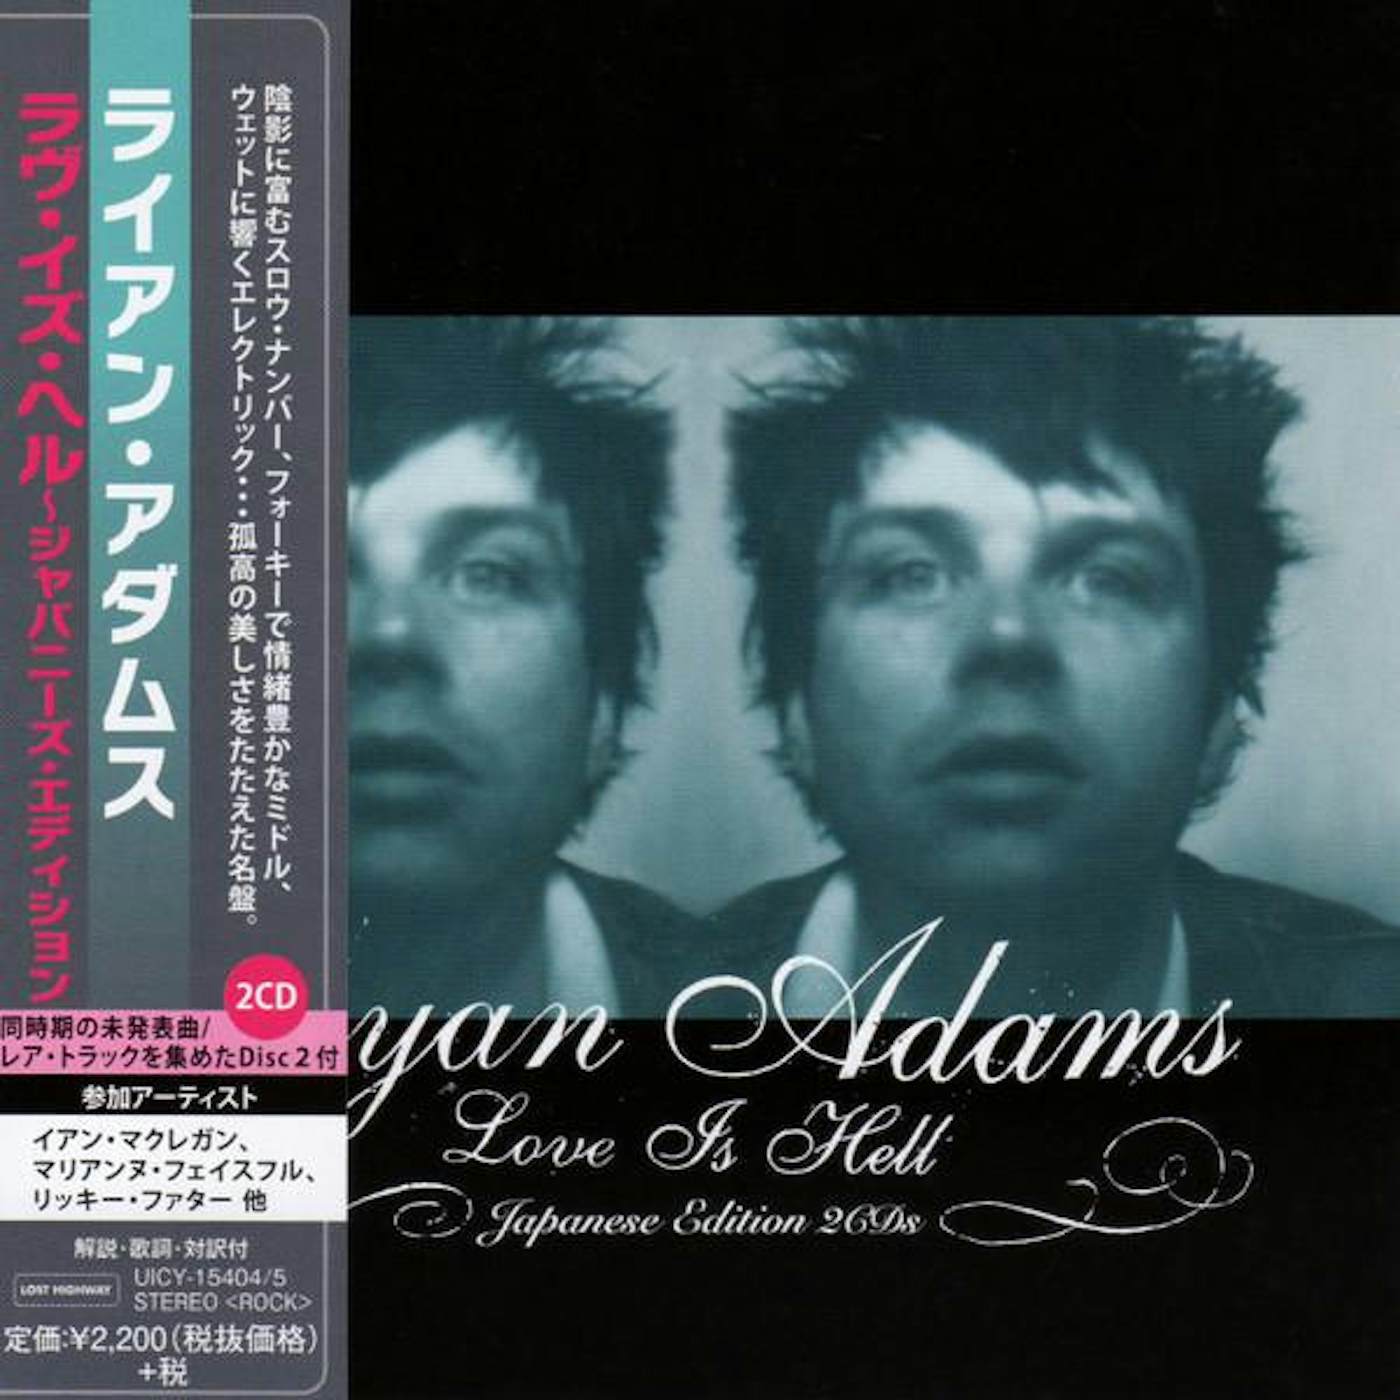 Ryan Adams – Rock N Roll ライアン・アダムス LP-